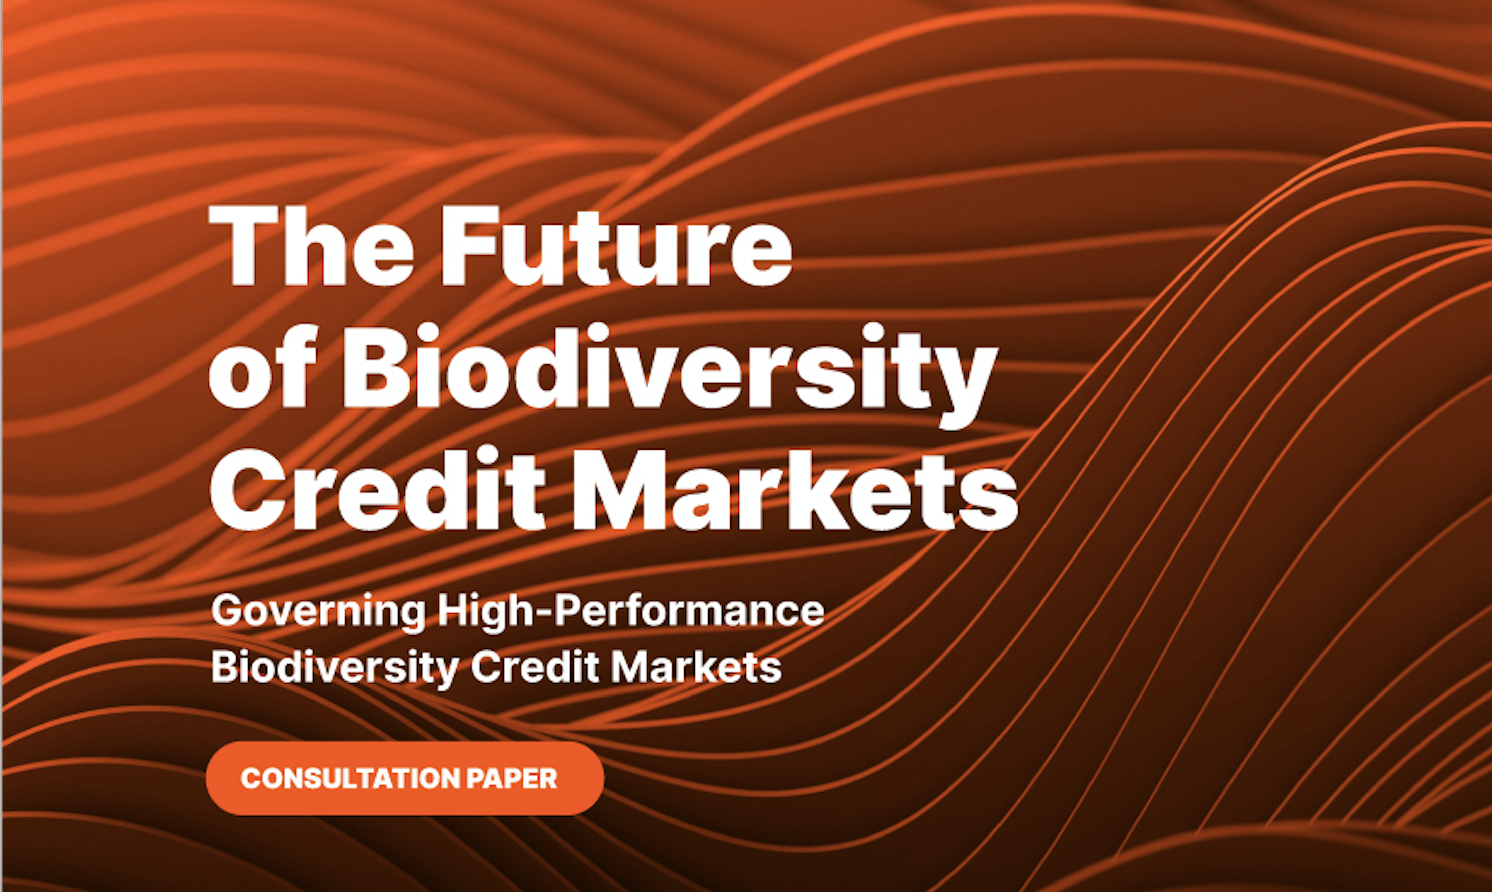 INVITATION: Consultation Paper on Biodiversity Credit Markets